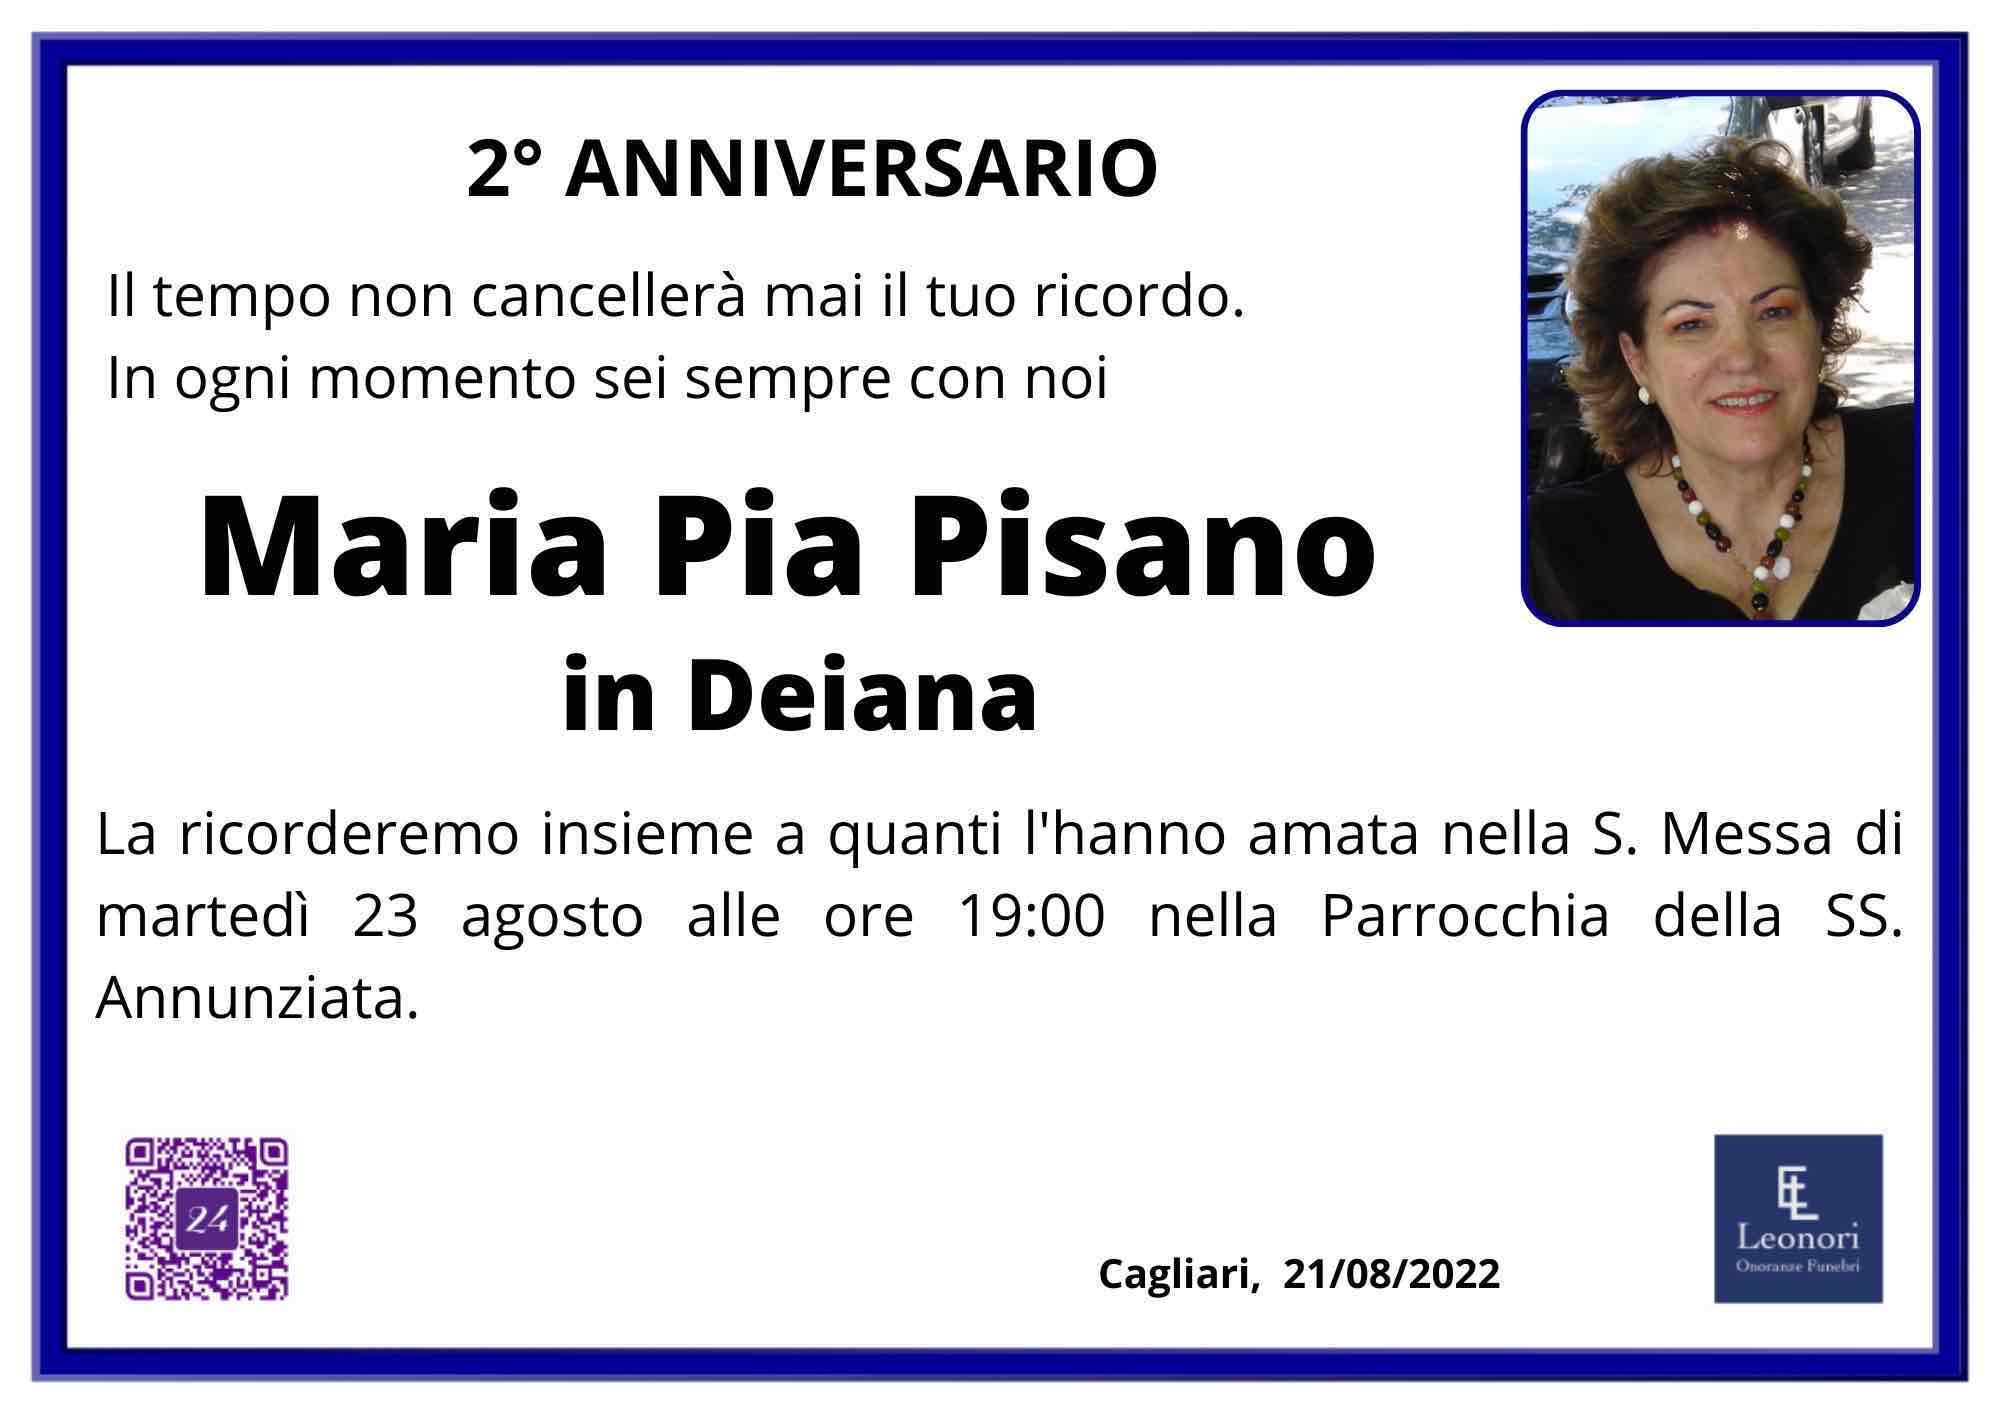 Maria Pia Pisano